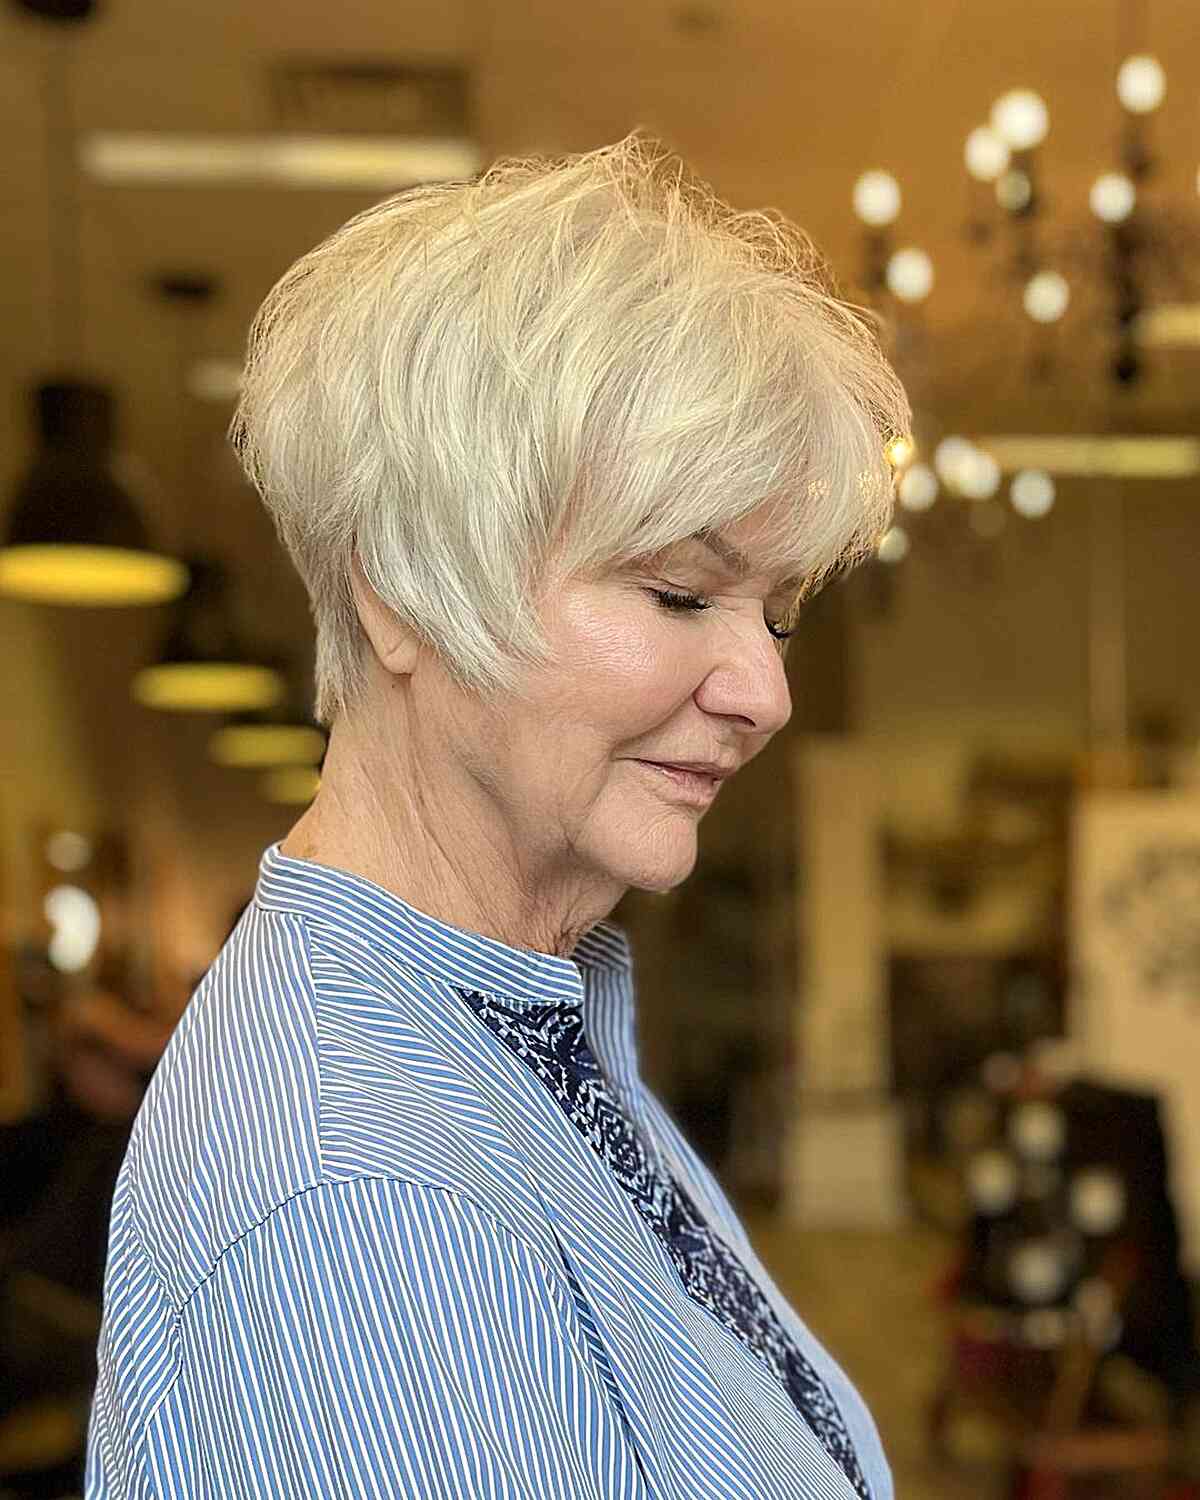 Choppy Textured Pixie Crop for Grandmas Over 70 with Fine Hair